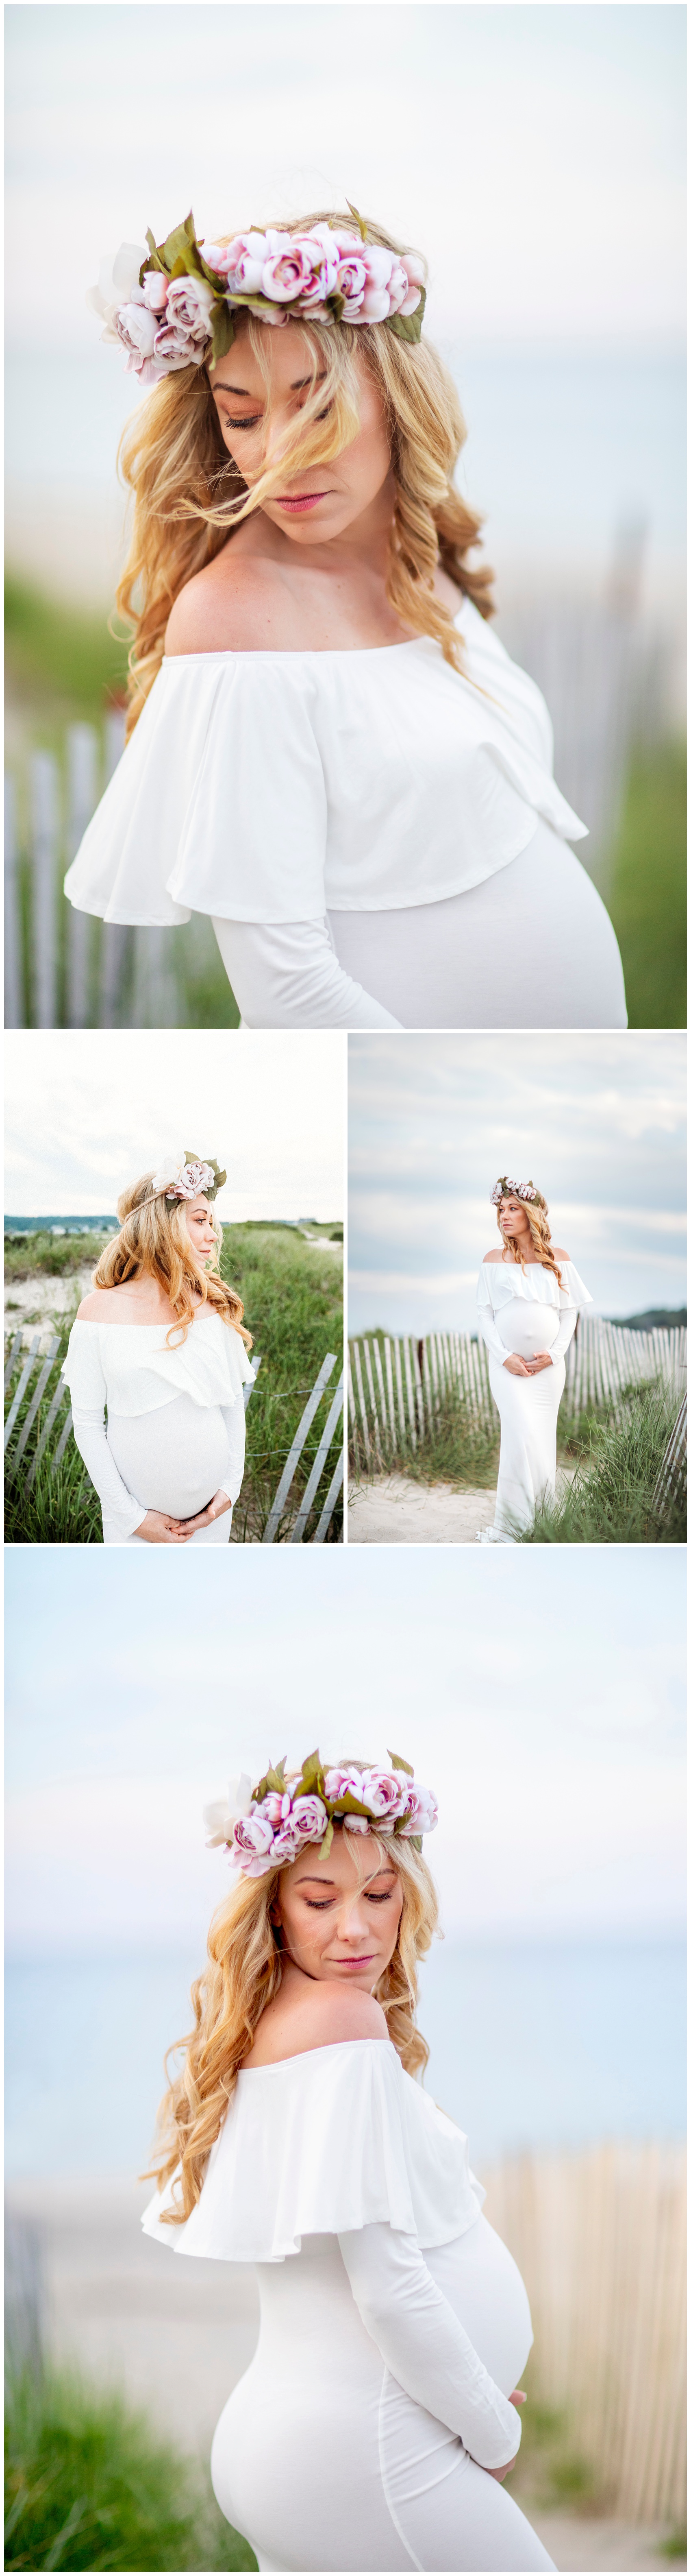 South Shore MA Beach Maternity Portraits